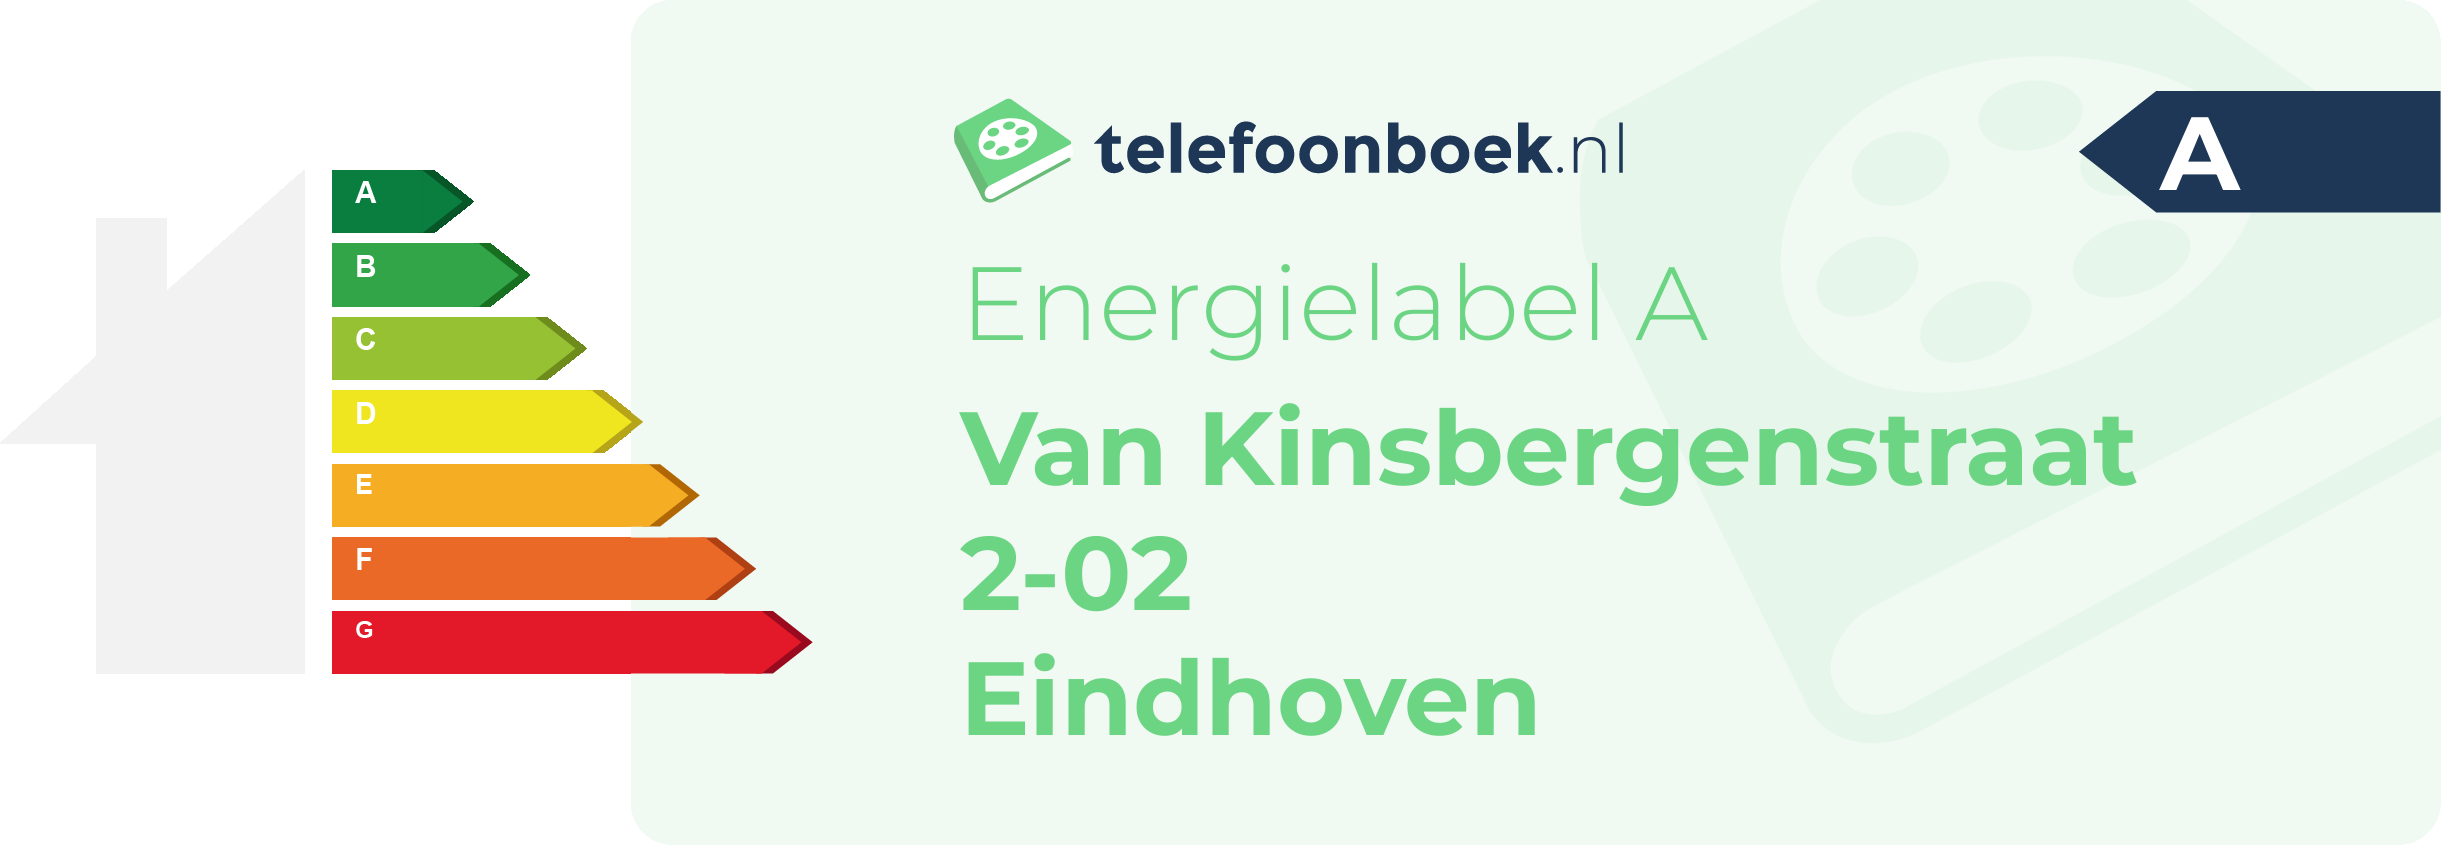 Energielabel Van Kinsbergenstraat 2-02 Eindhoven